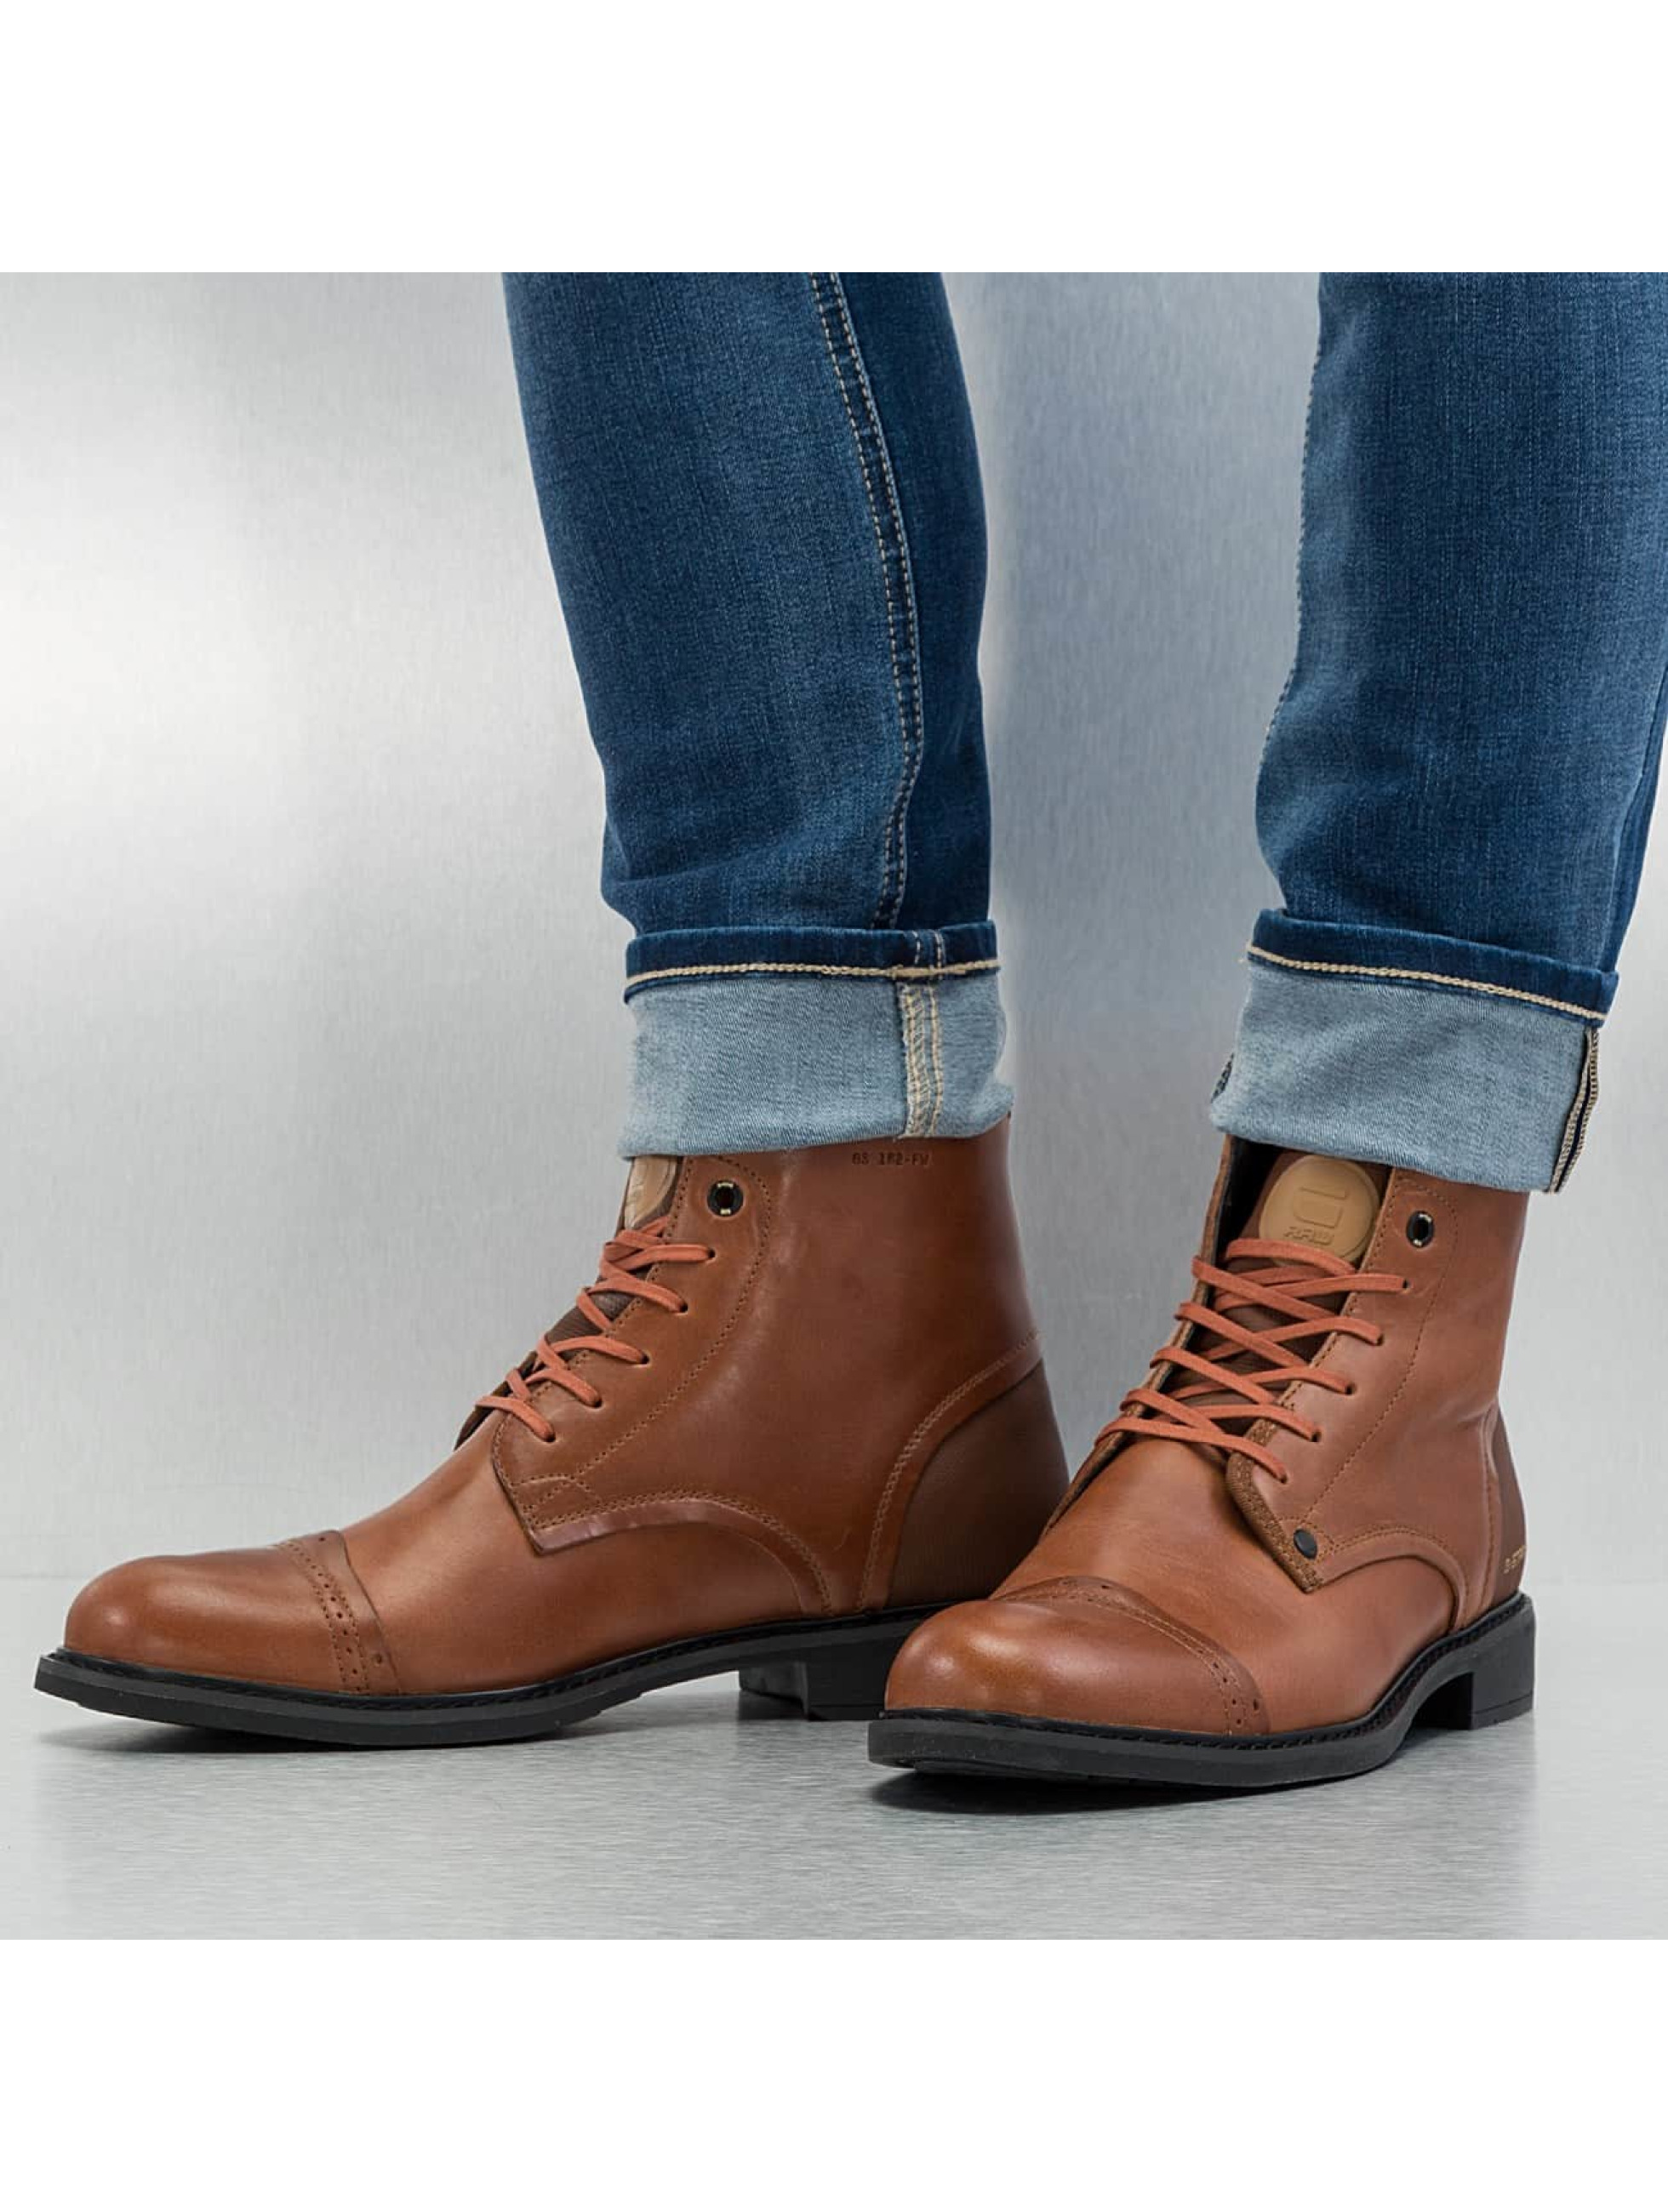 G-Star schoen / Boots Warth Leather in bruin